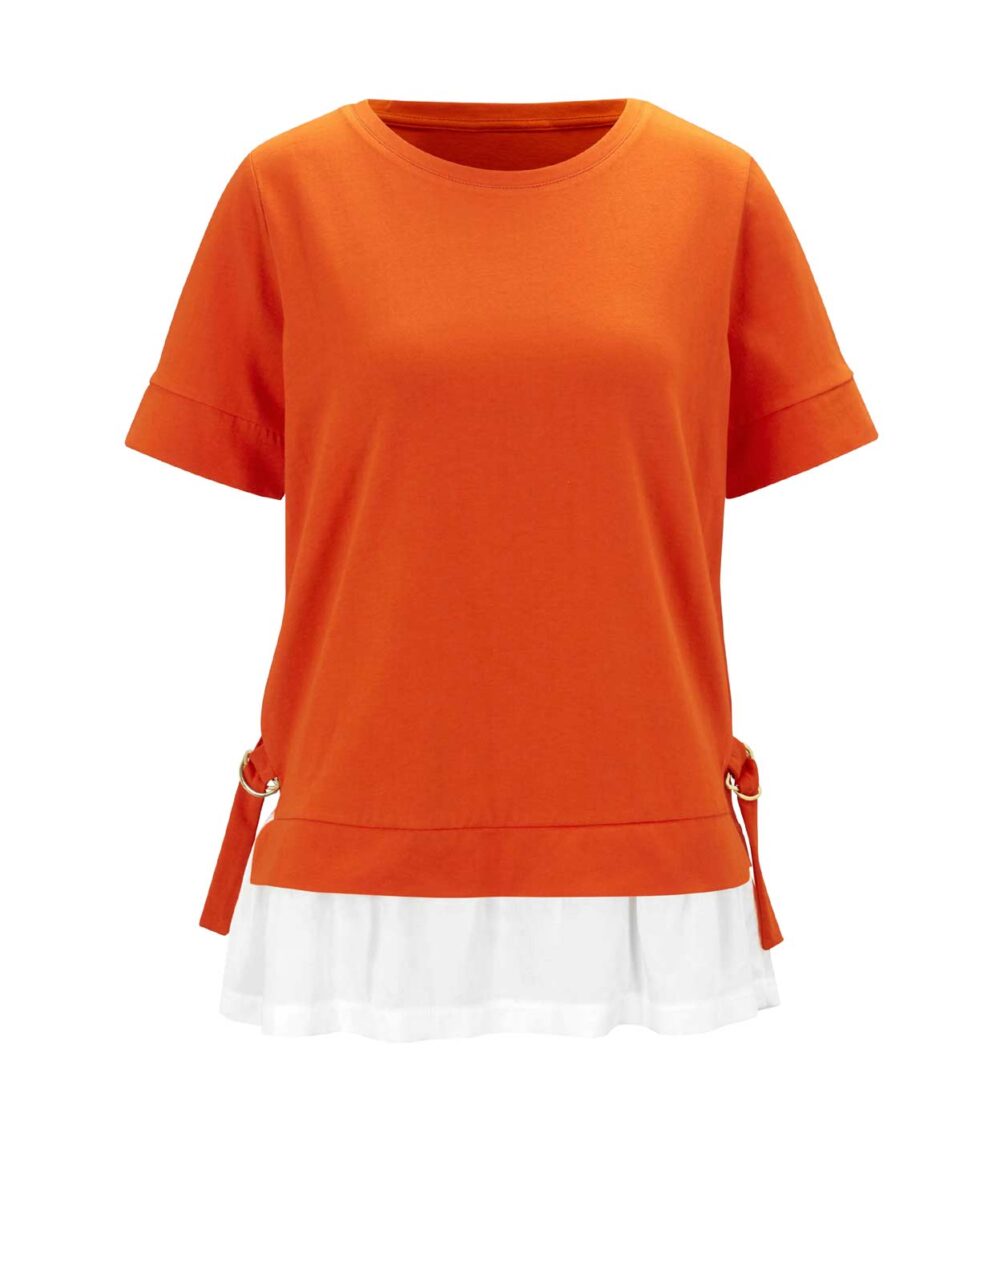 412.298 Damen Shirt 2 in 1 orange ecru Oberteil T-Shirt Frühling Rick Cardona